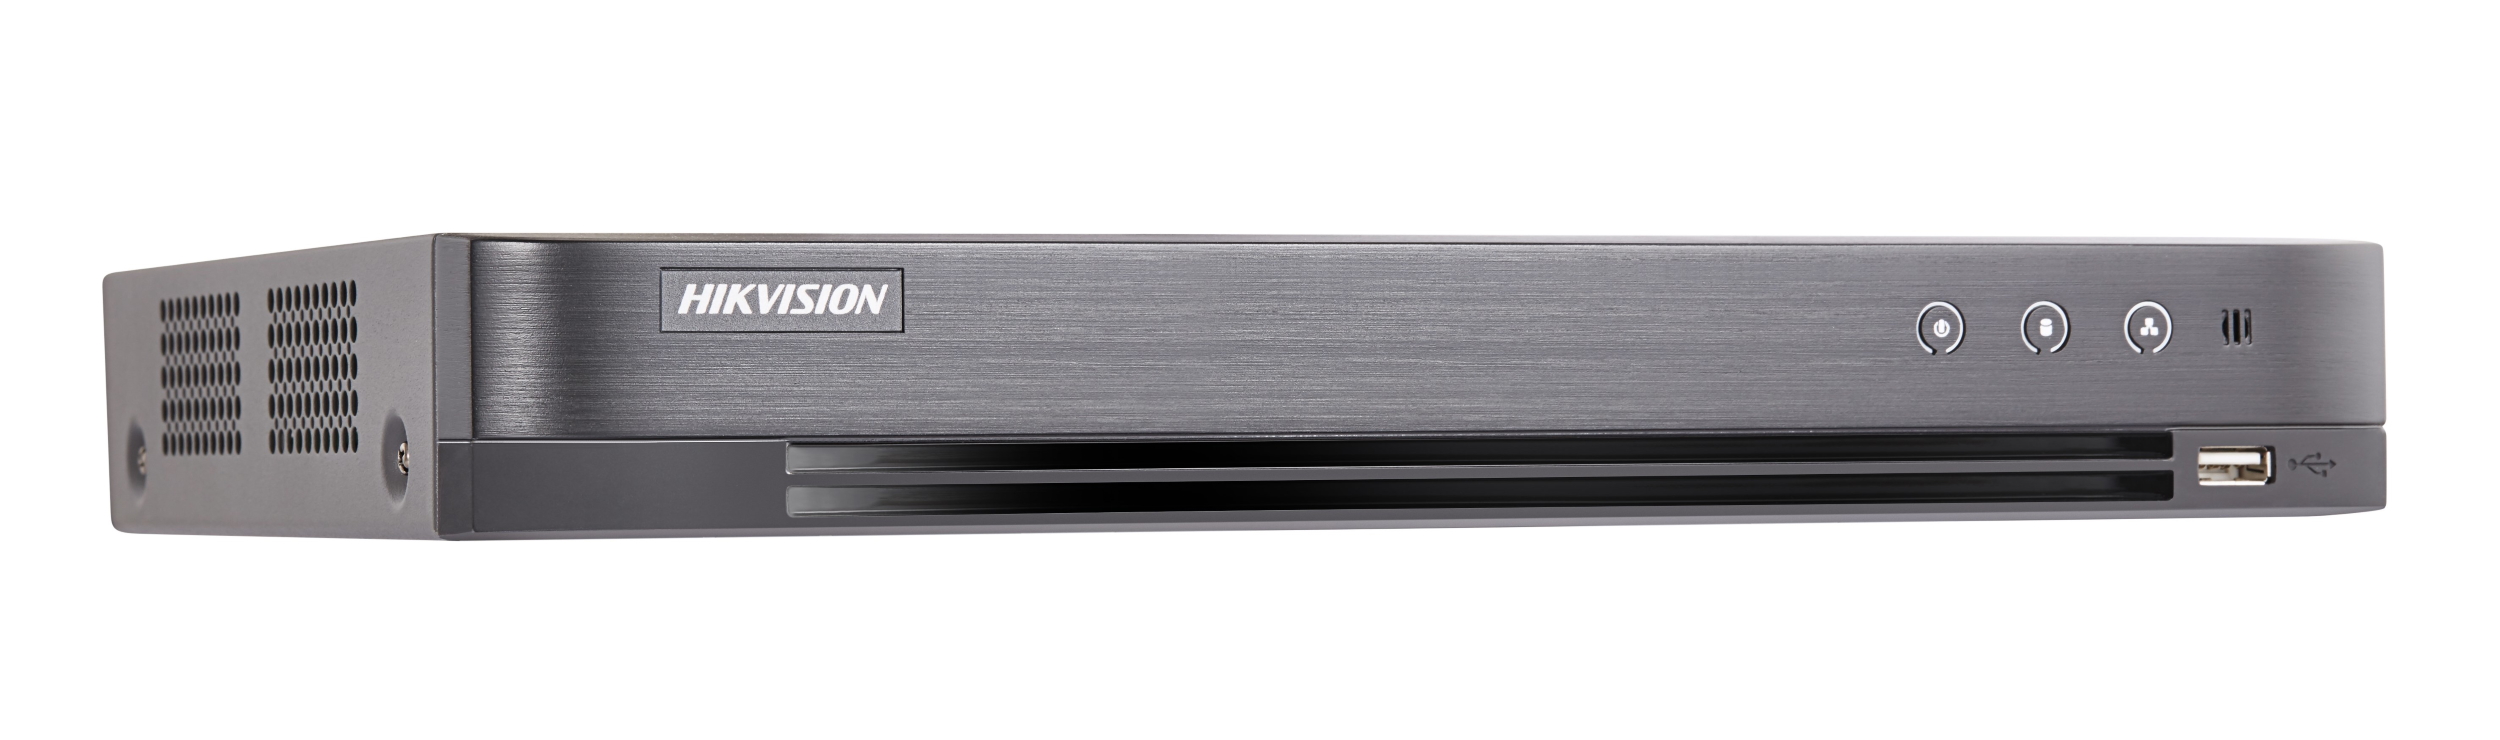 20000857 Hikvision Acusense Turbo HD DVR 4 kanalen, 5MP, 1 HDD Tribride.